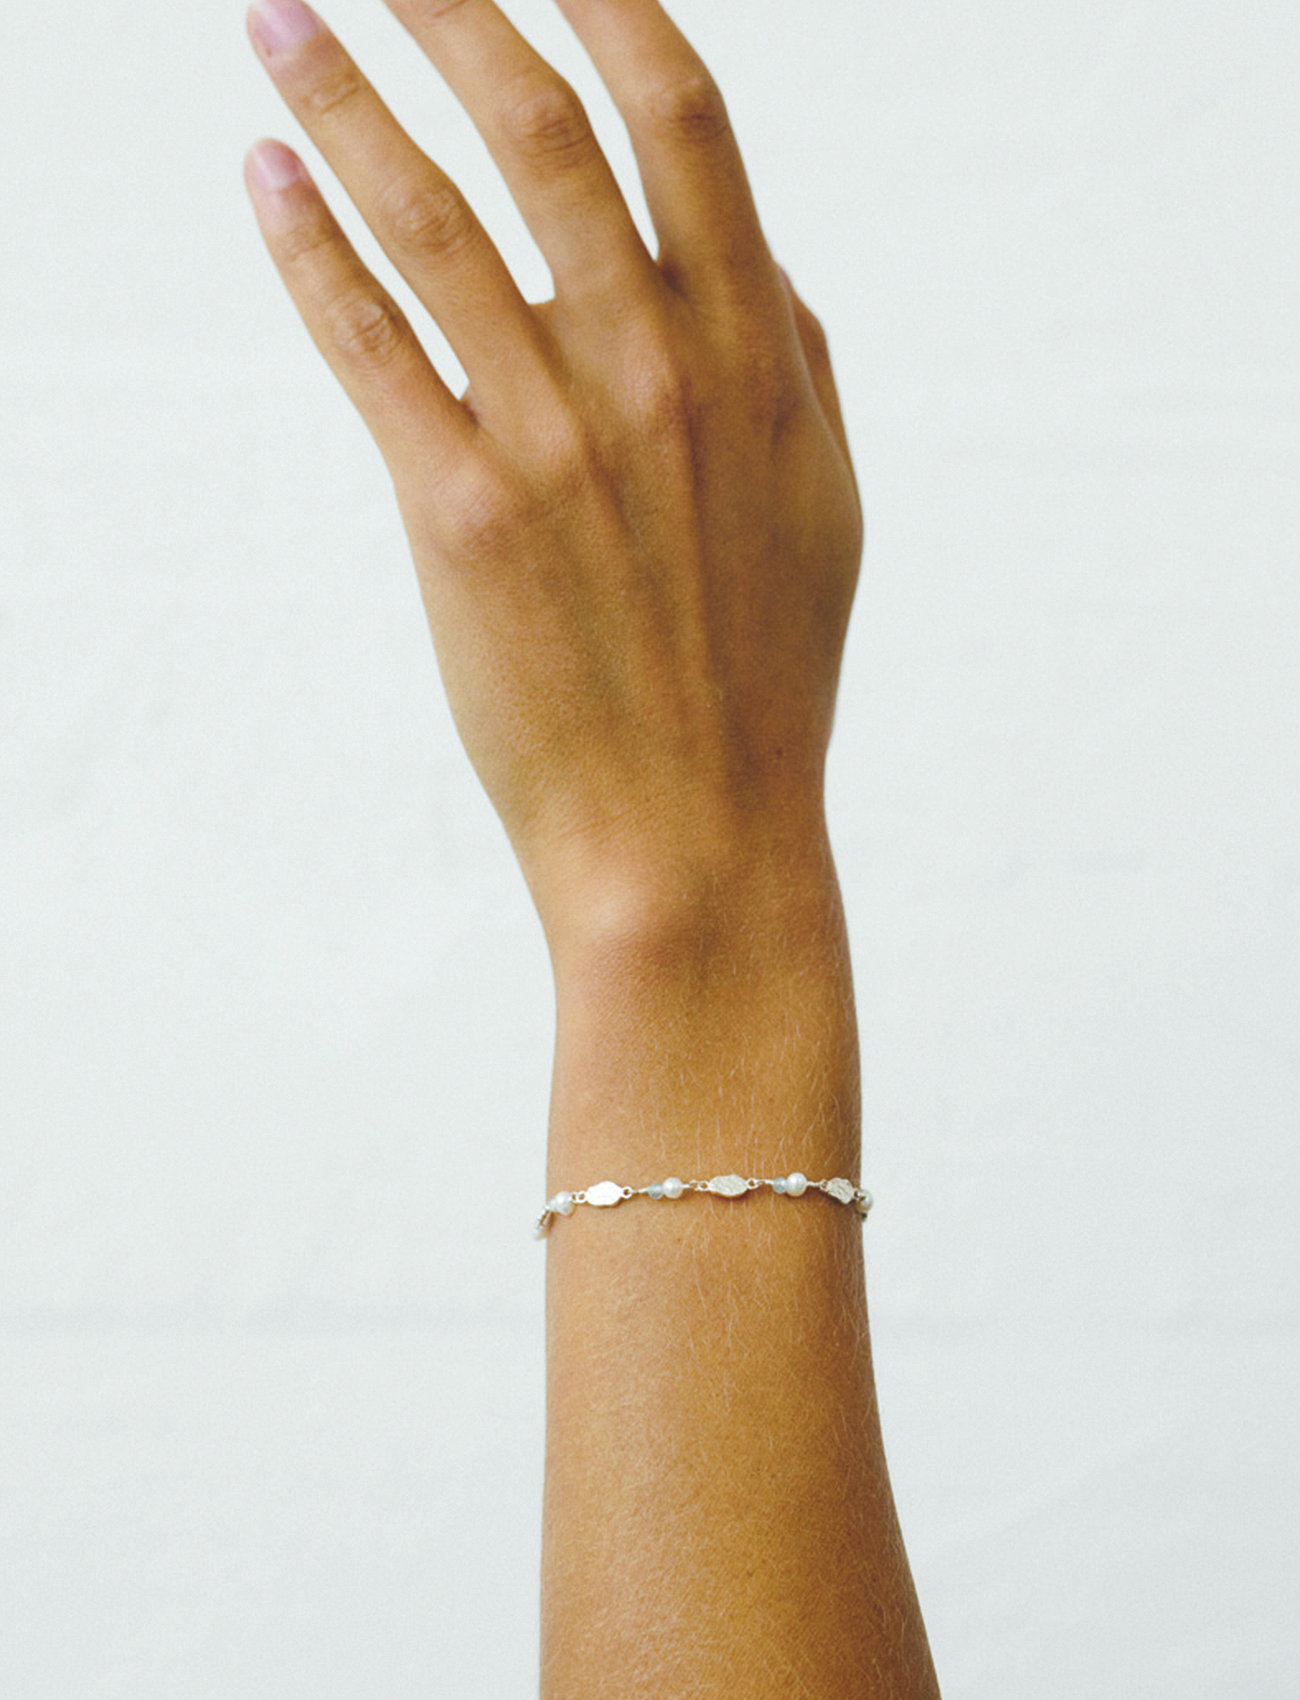 Pernille Corydon Jewelry - Elegant fashion Jewelry - Free Shipping